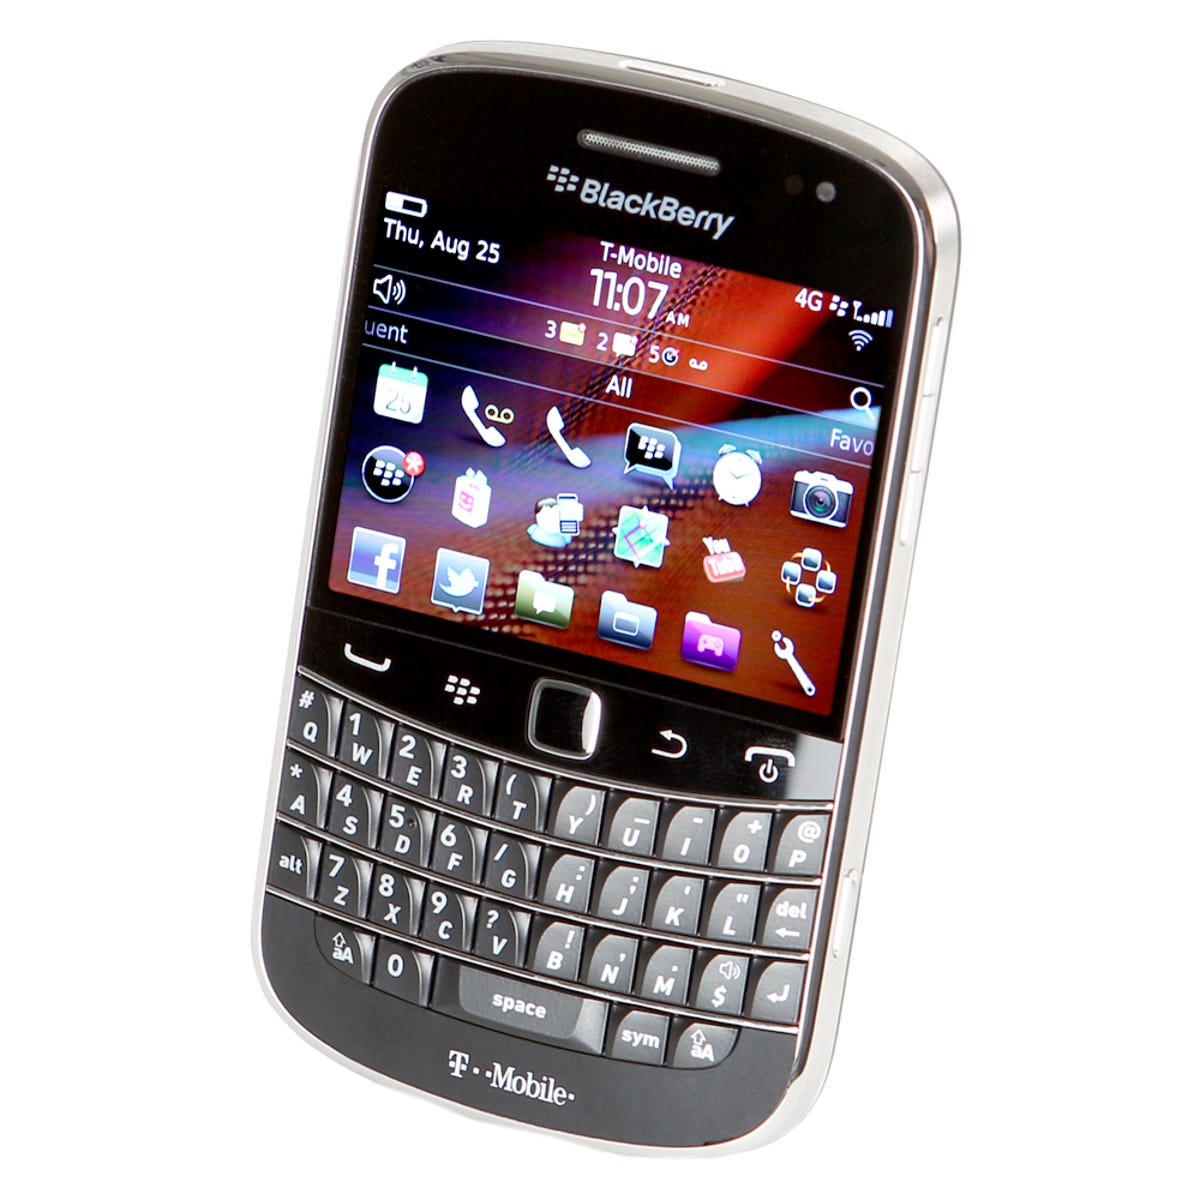 BlackBerry Bold 9900 (T-Mobile) review: BlackBerry Bold 9900 (T